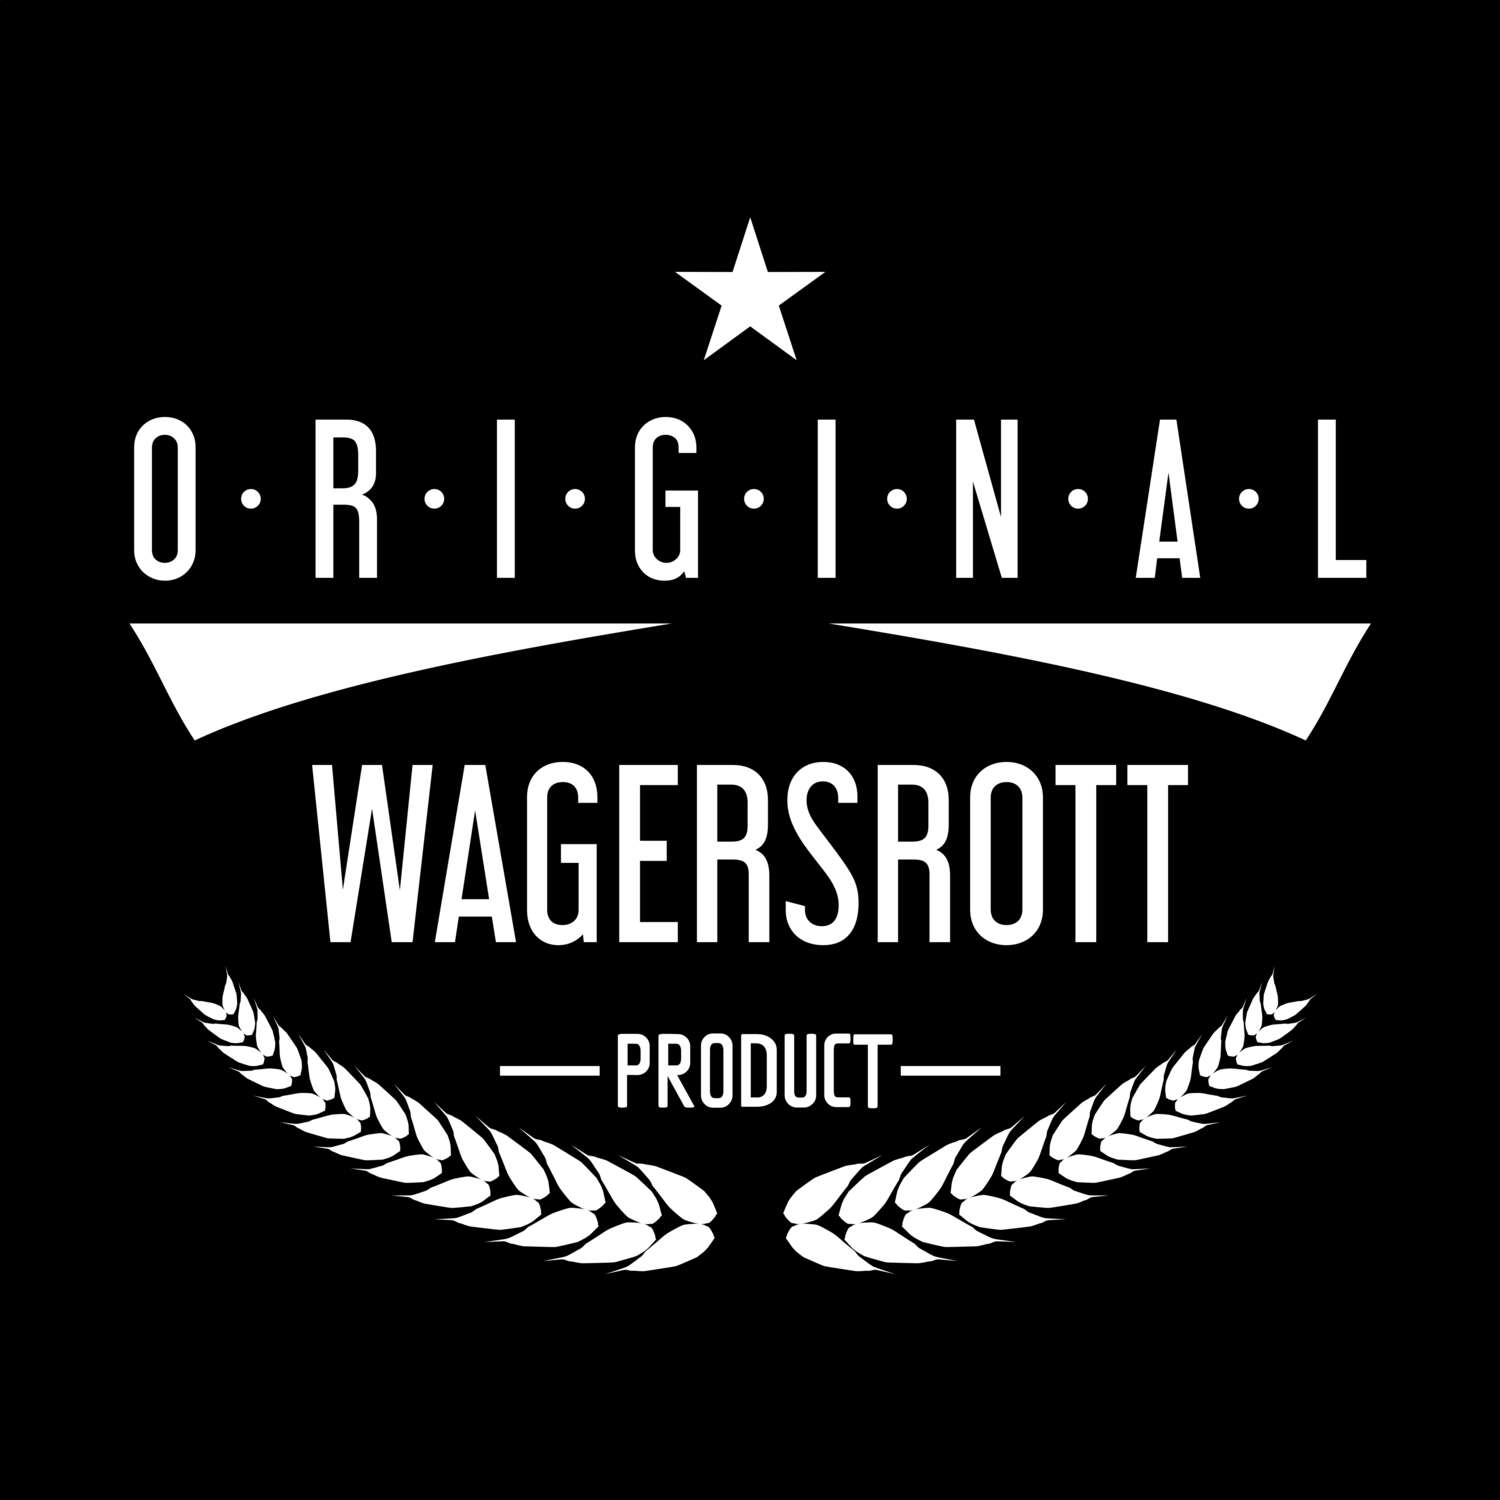 Wagersrott T-Shirt »Original Product«